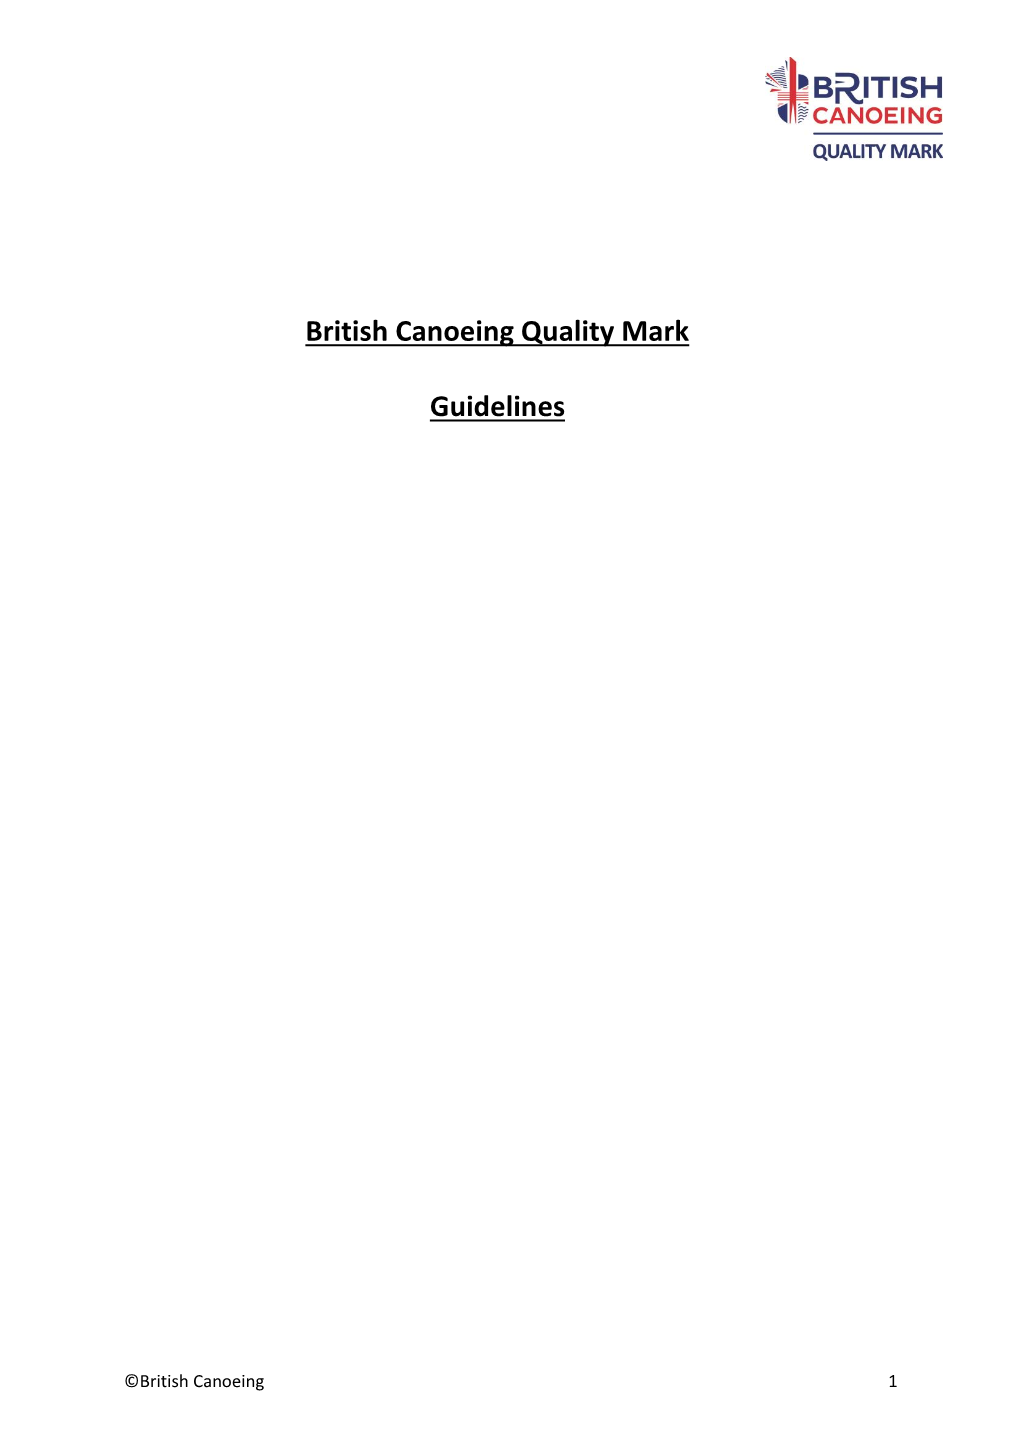 British Canoeing Quality Mark Guidelines